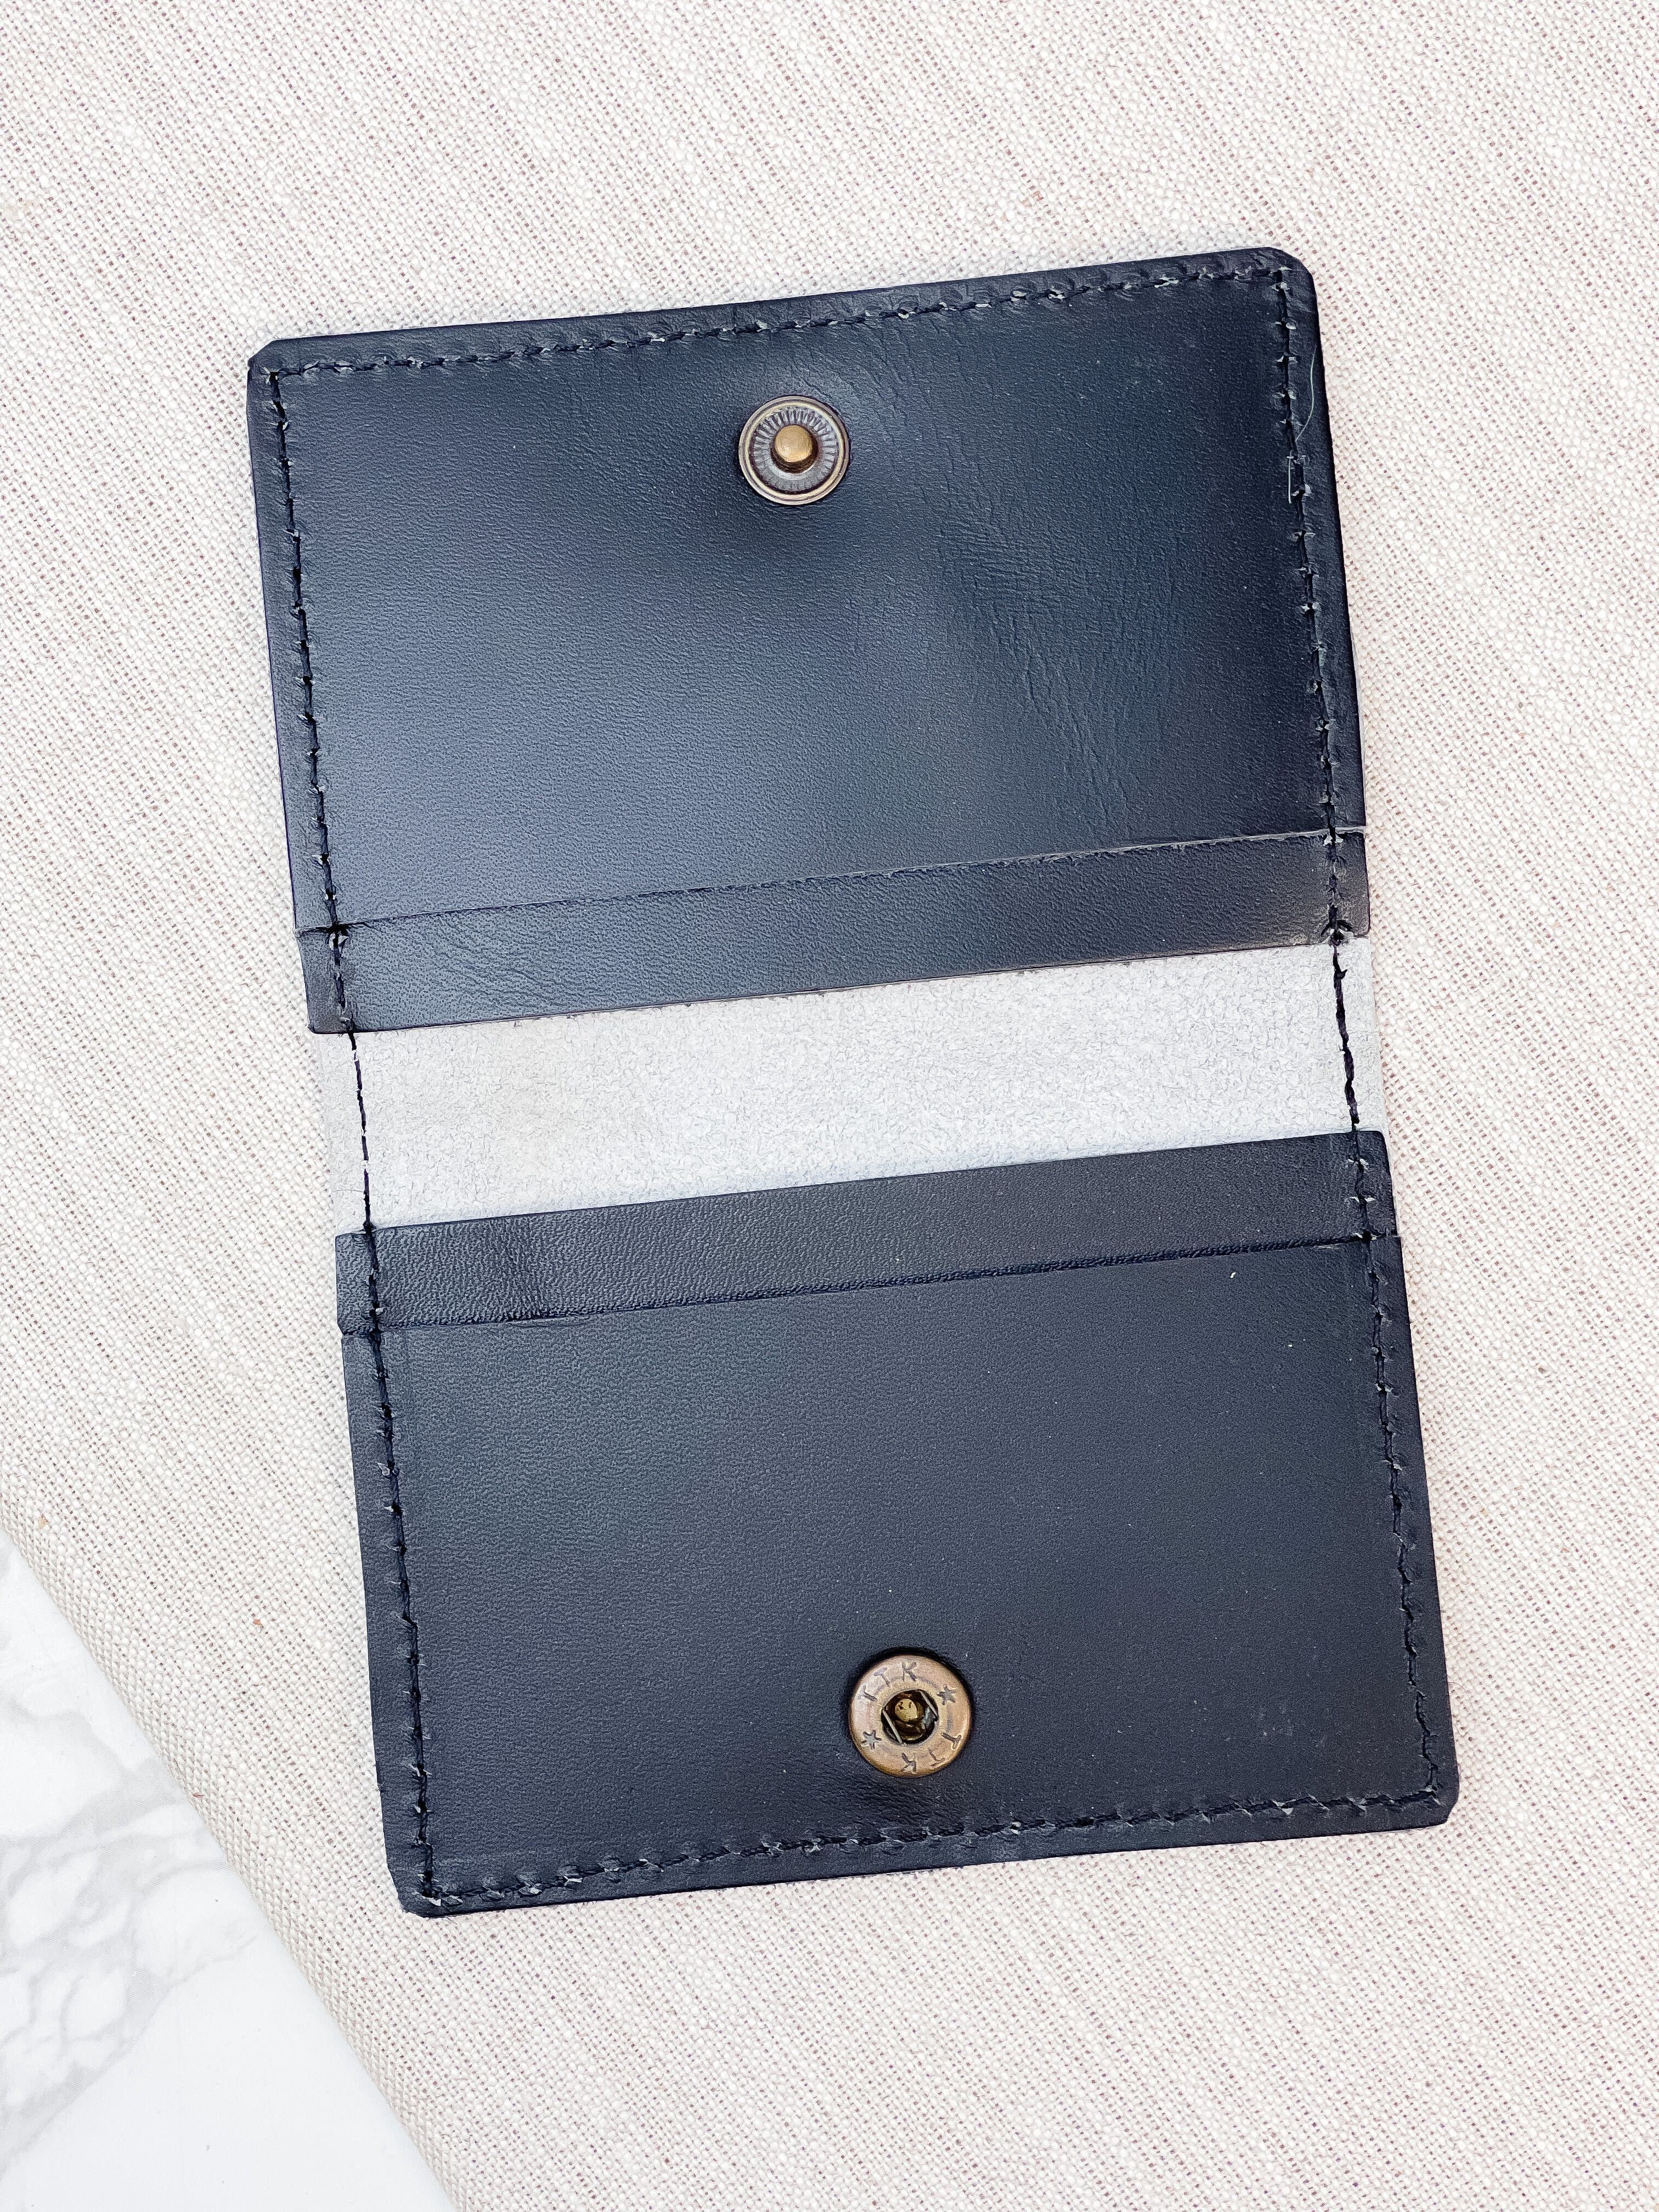 Leather Credit Card Holder - Black & White